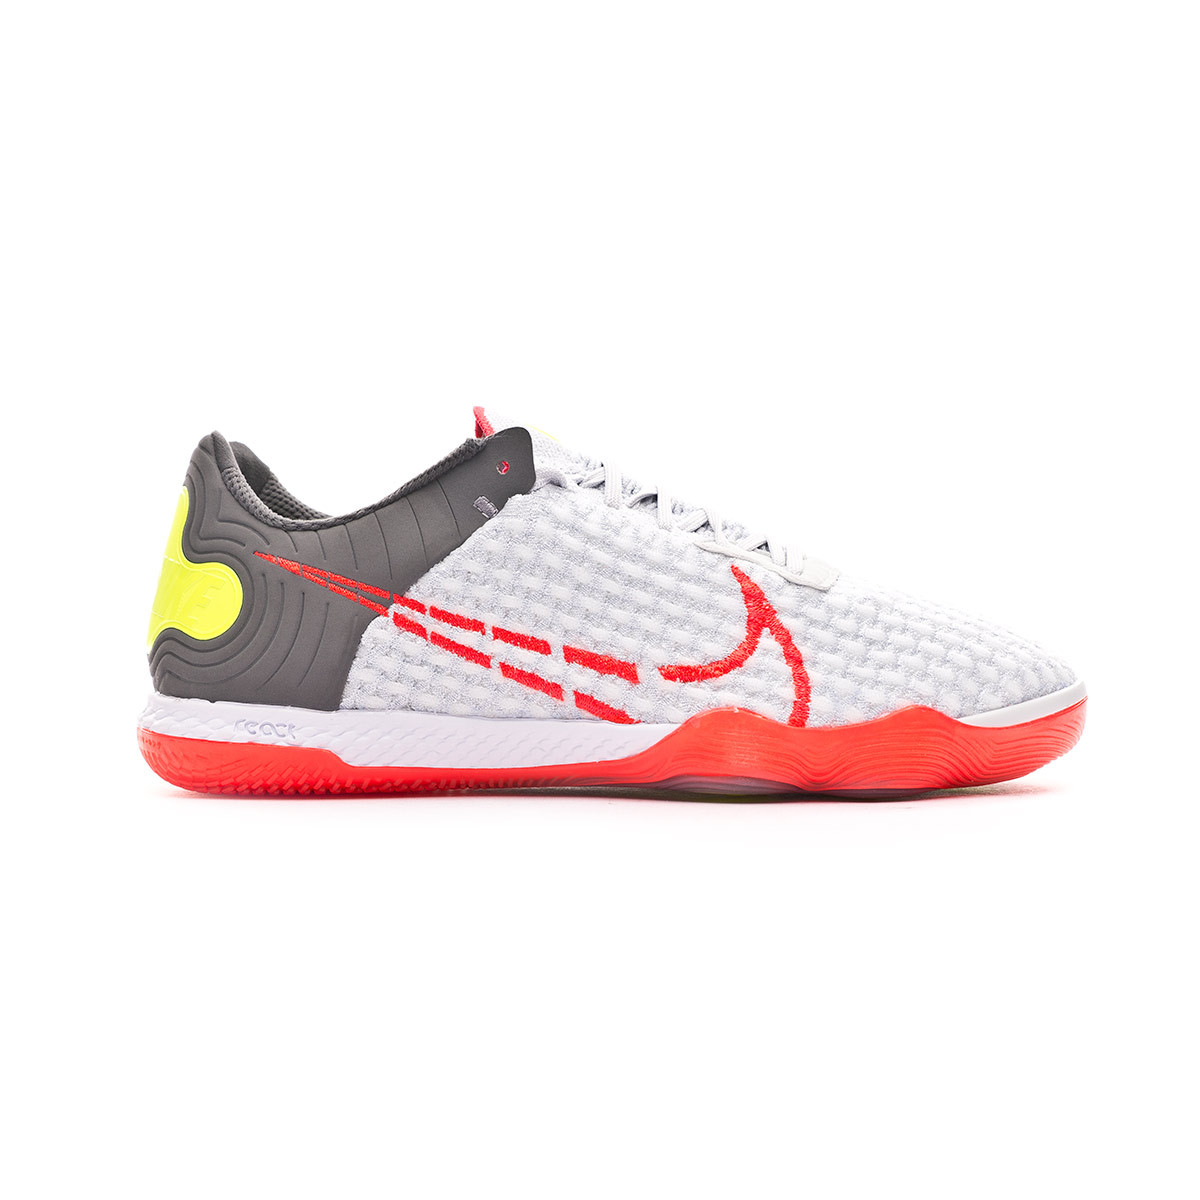 Chaussure de futsal Nike React Gato White-Bright crimson-Cool grey ...